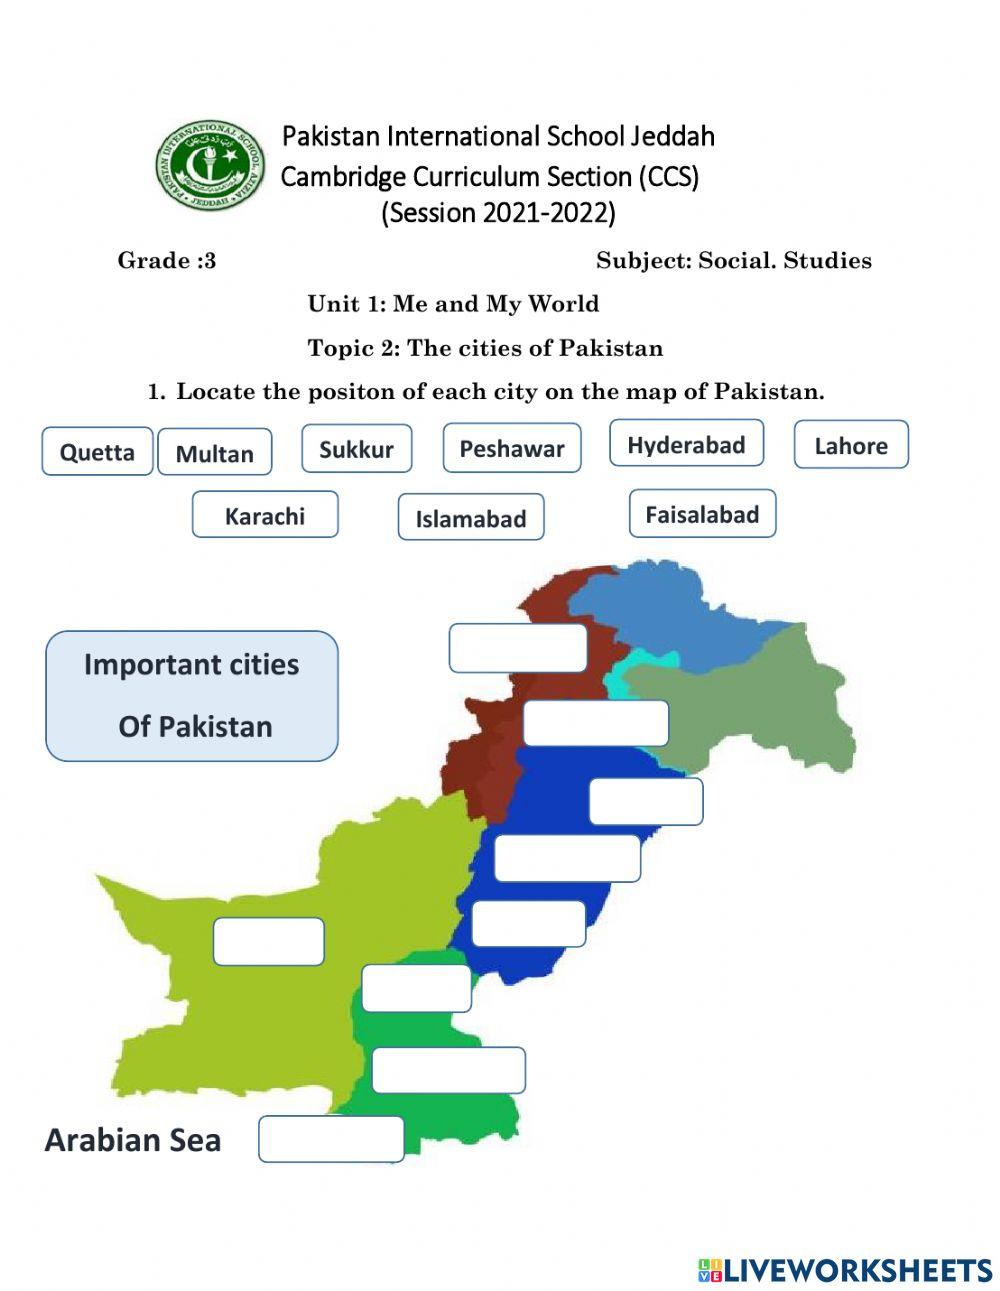 Cities of Pakistan